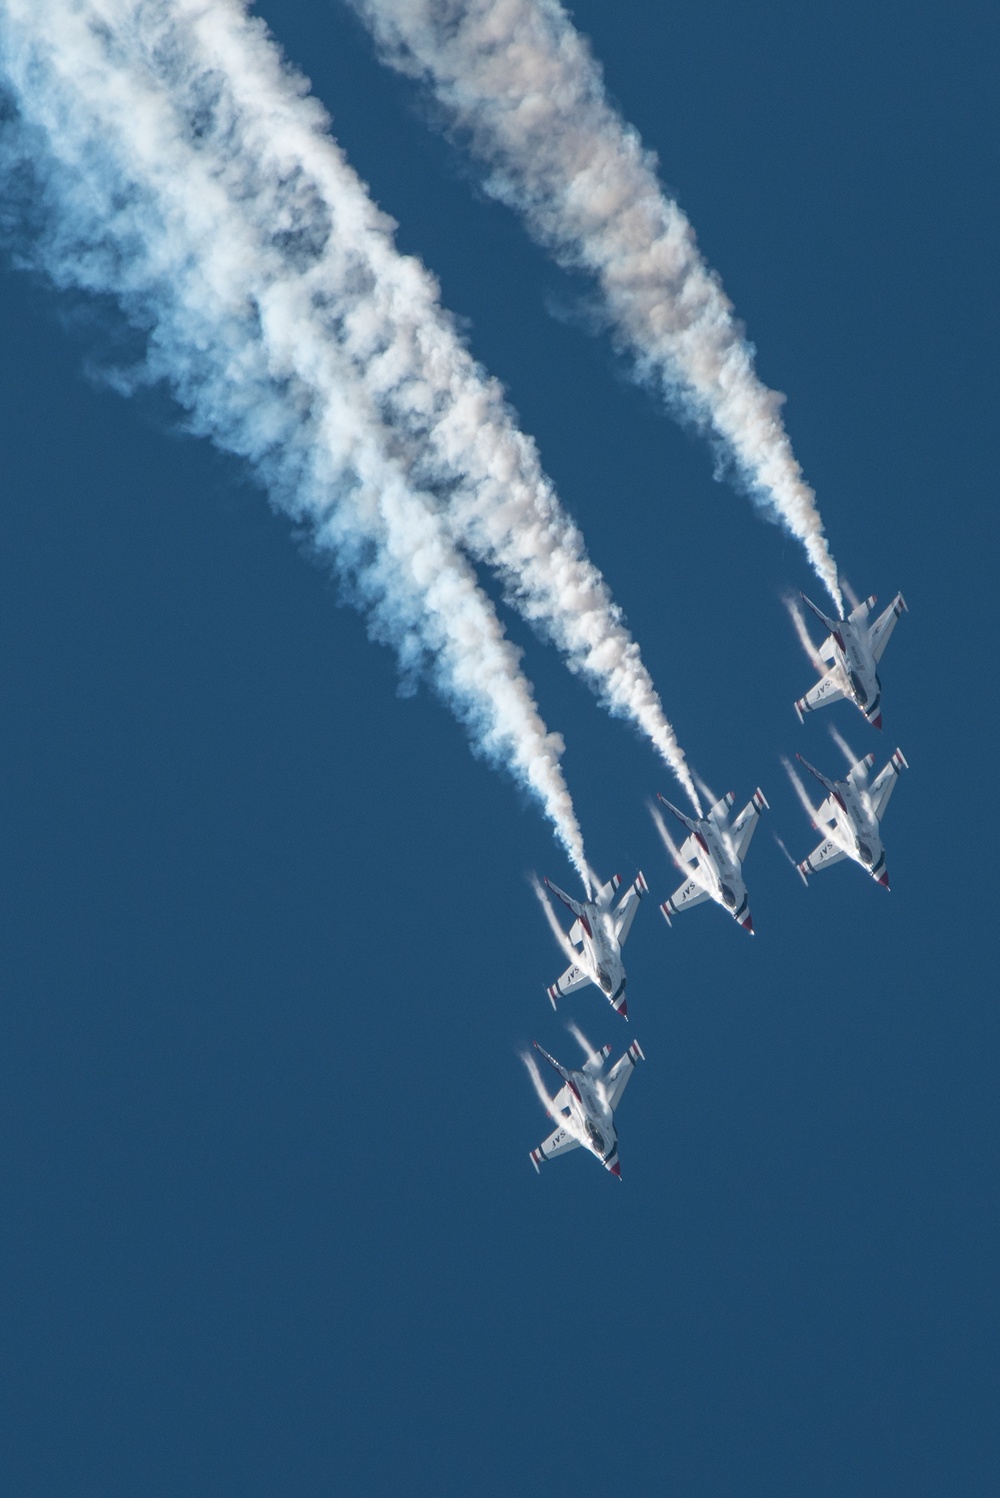 USAF Thunderbirds perform over Cheyenne